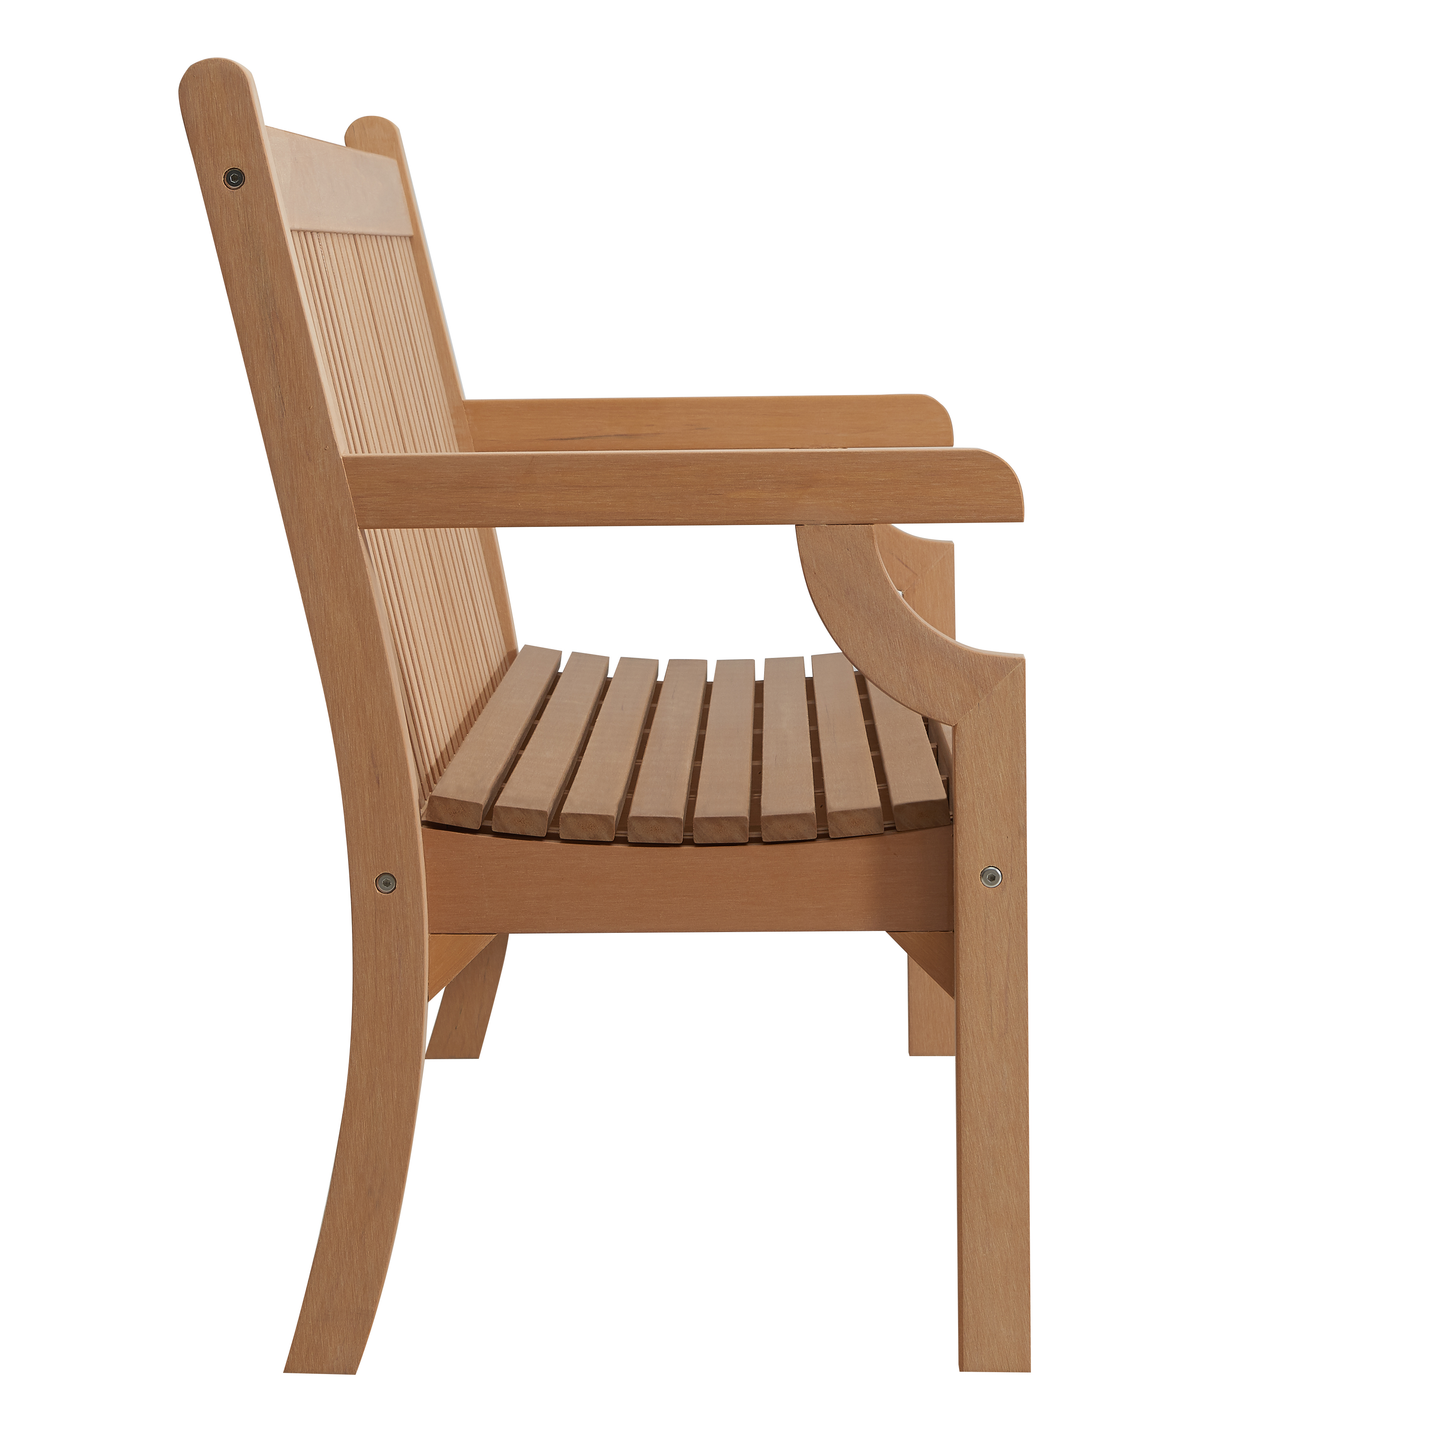 Winawood Sandwick 3 Seater Wood Effect Bench - New Teak